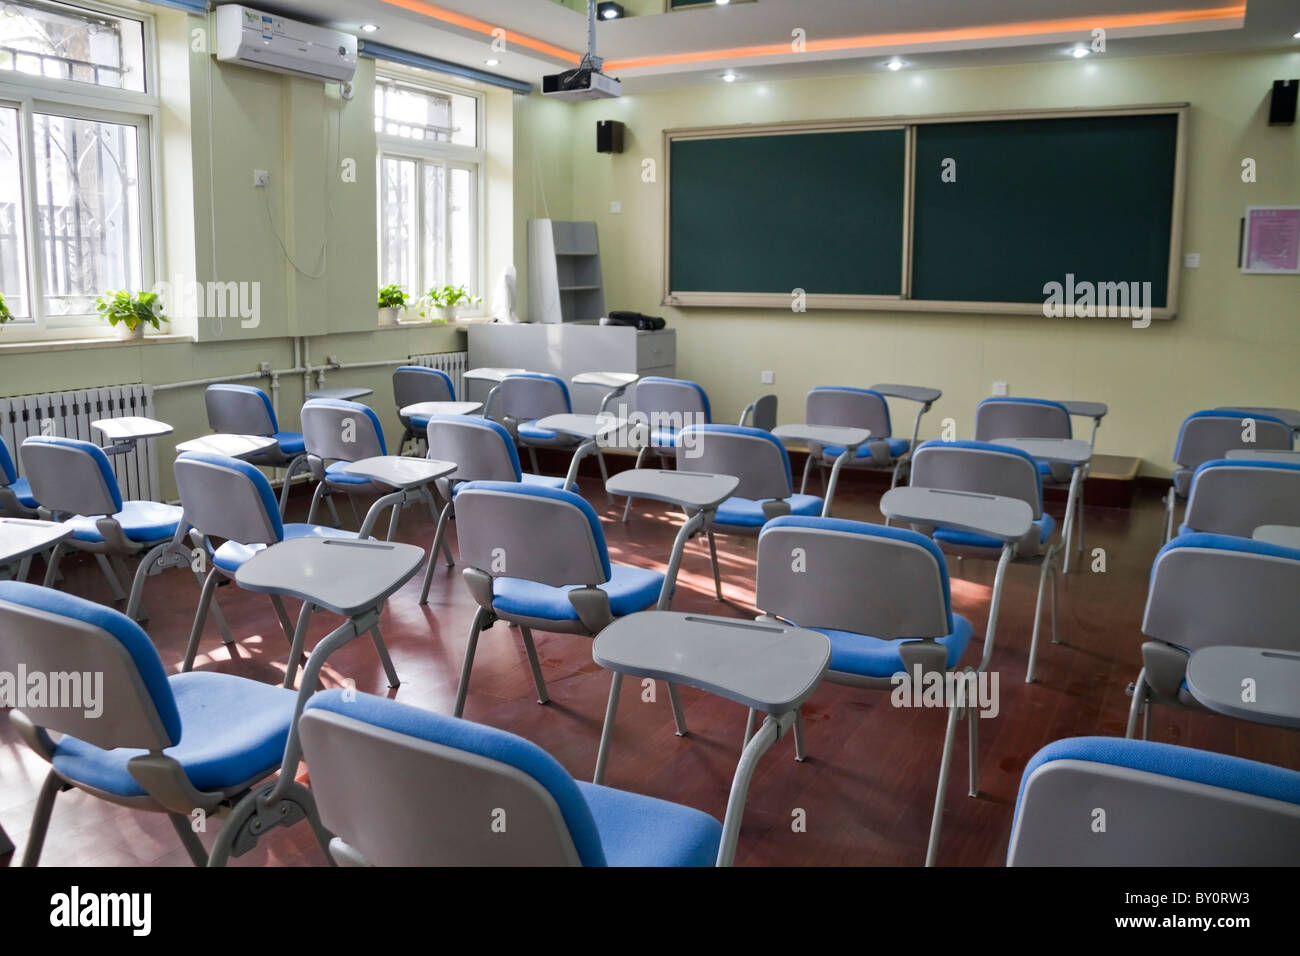 Elementary school classroom in China Stock Photo